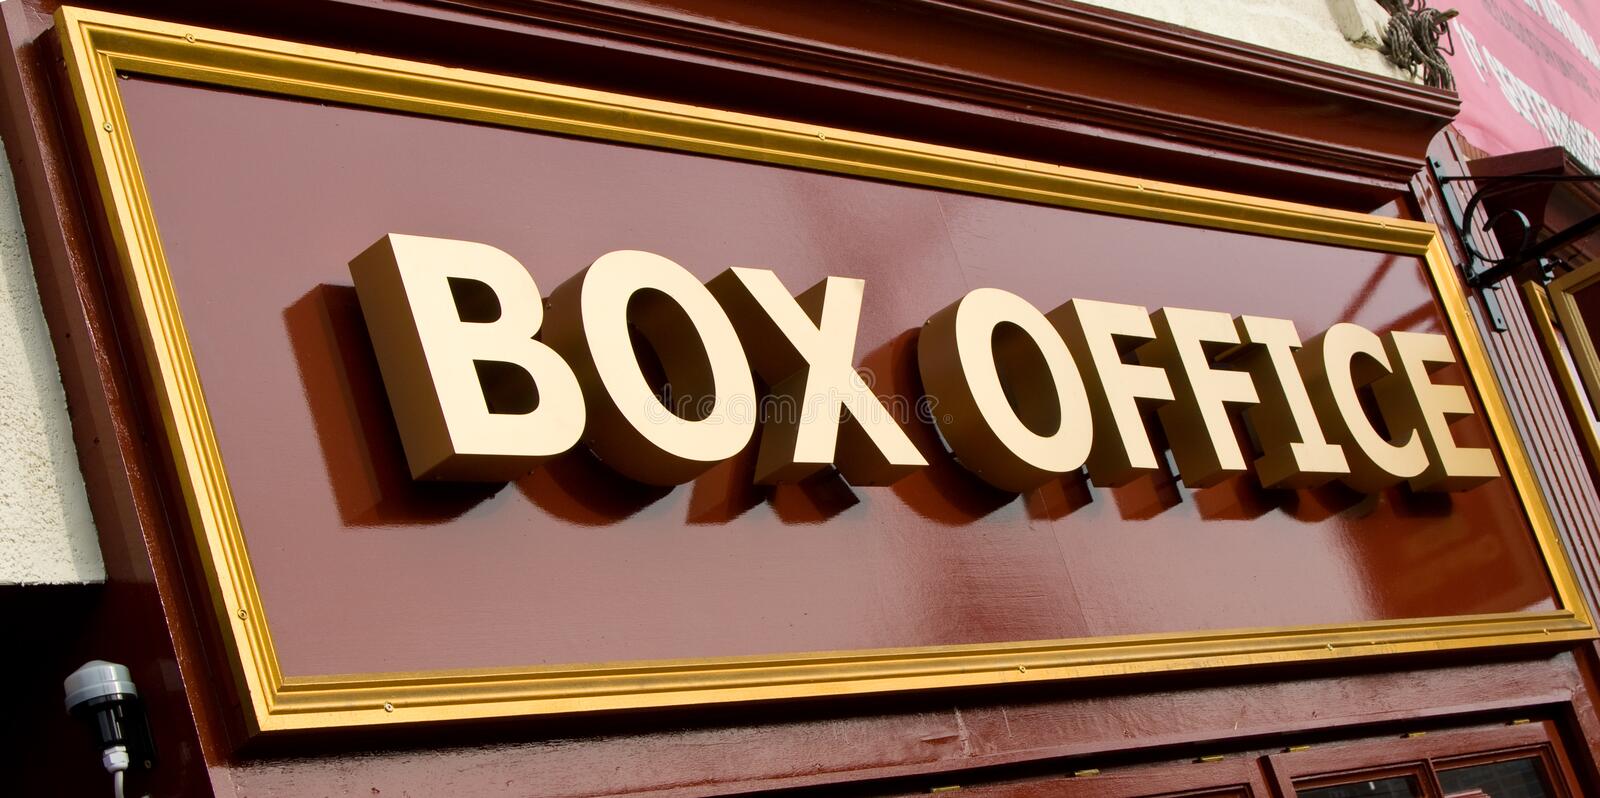 Box Office sign